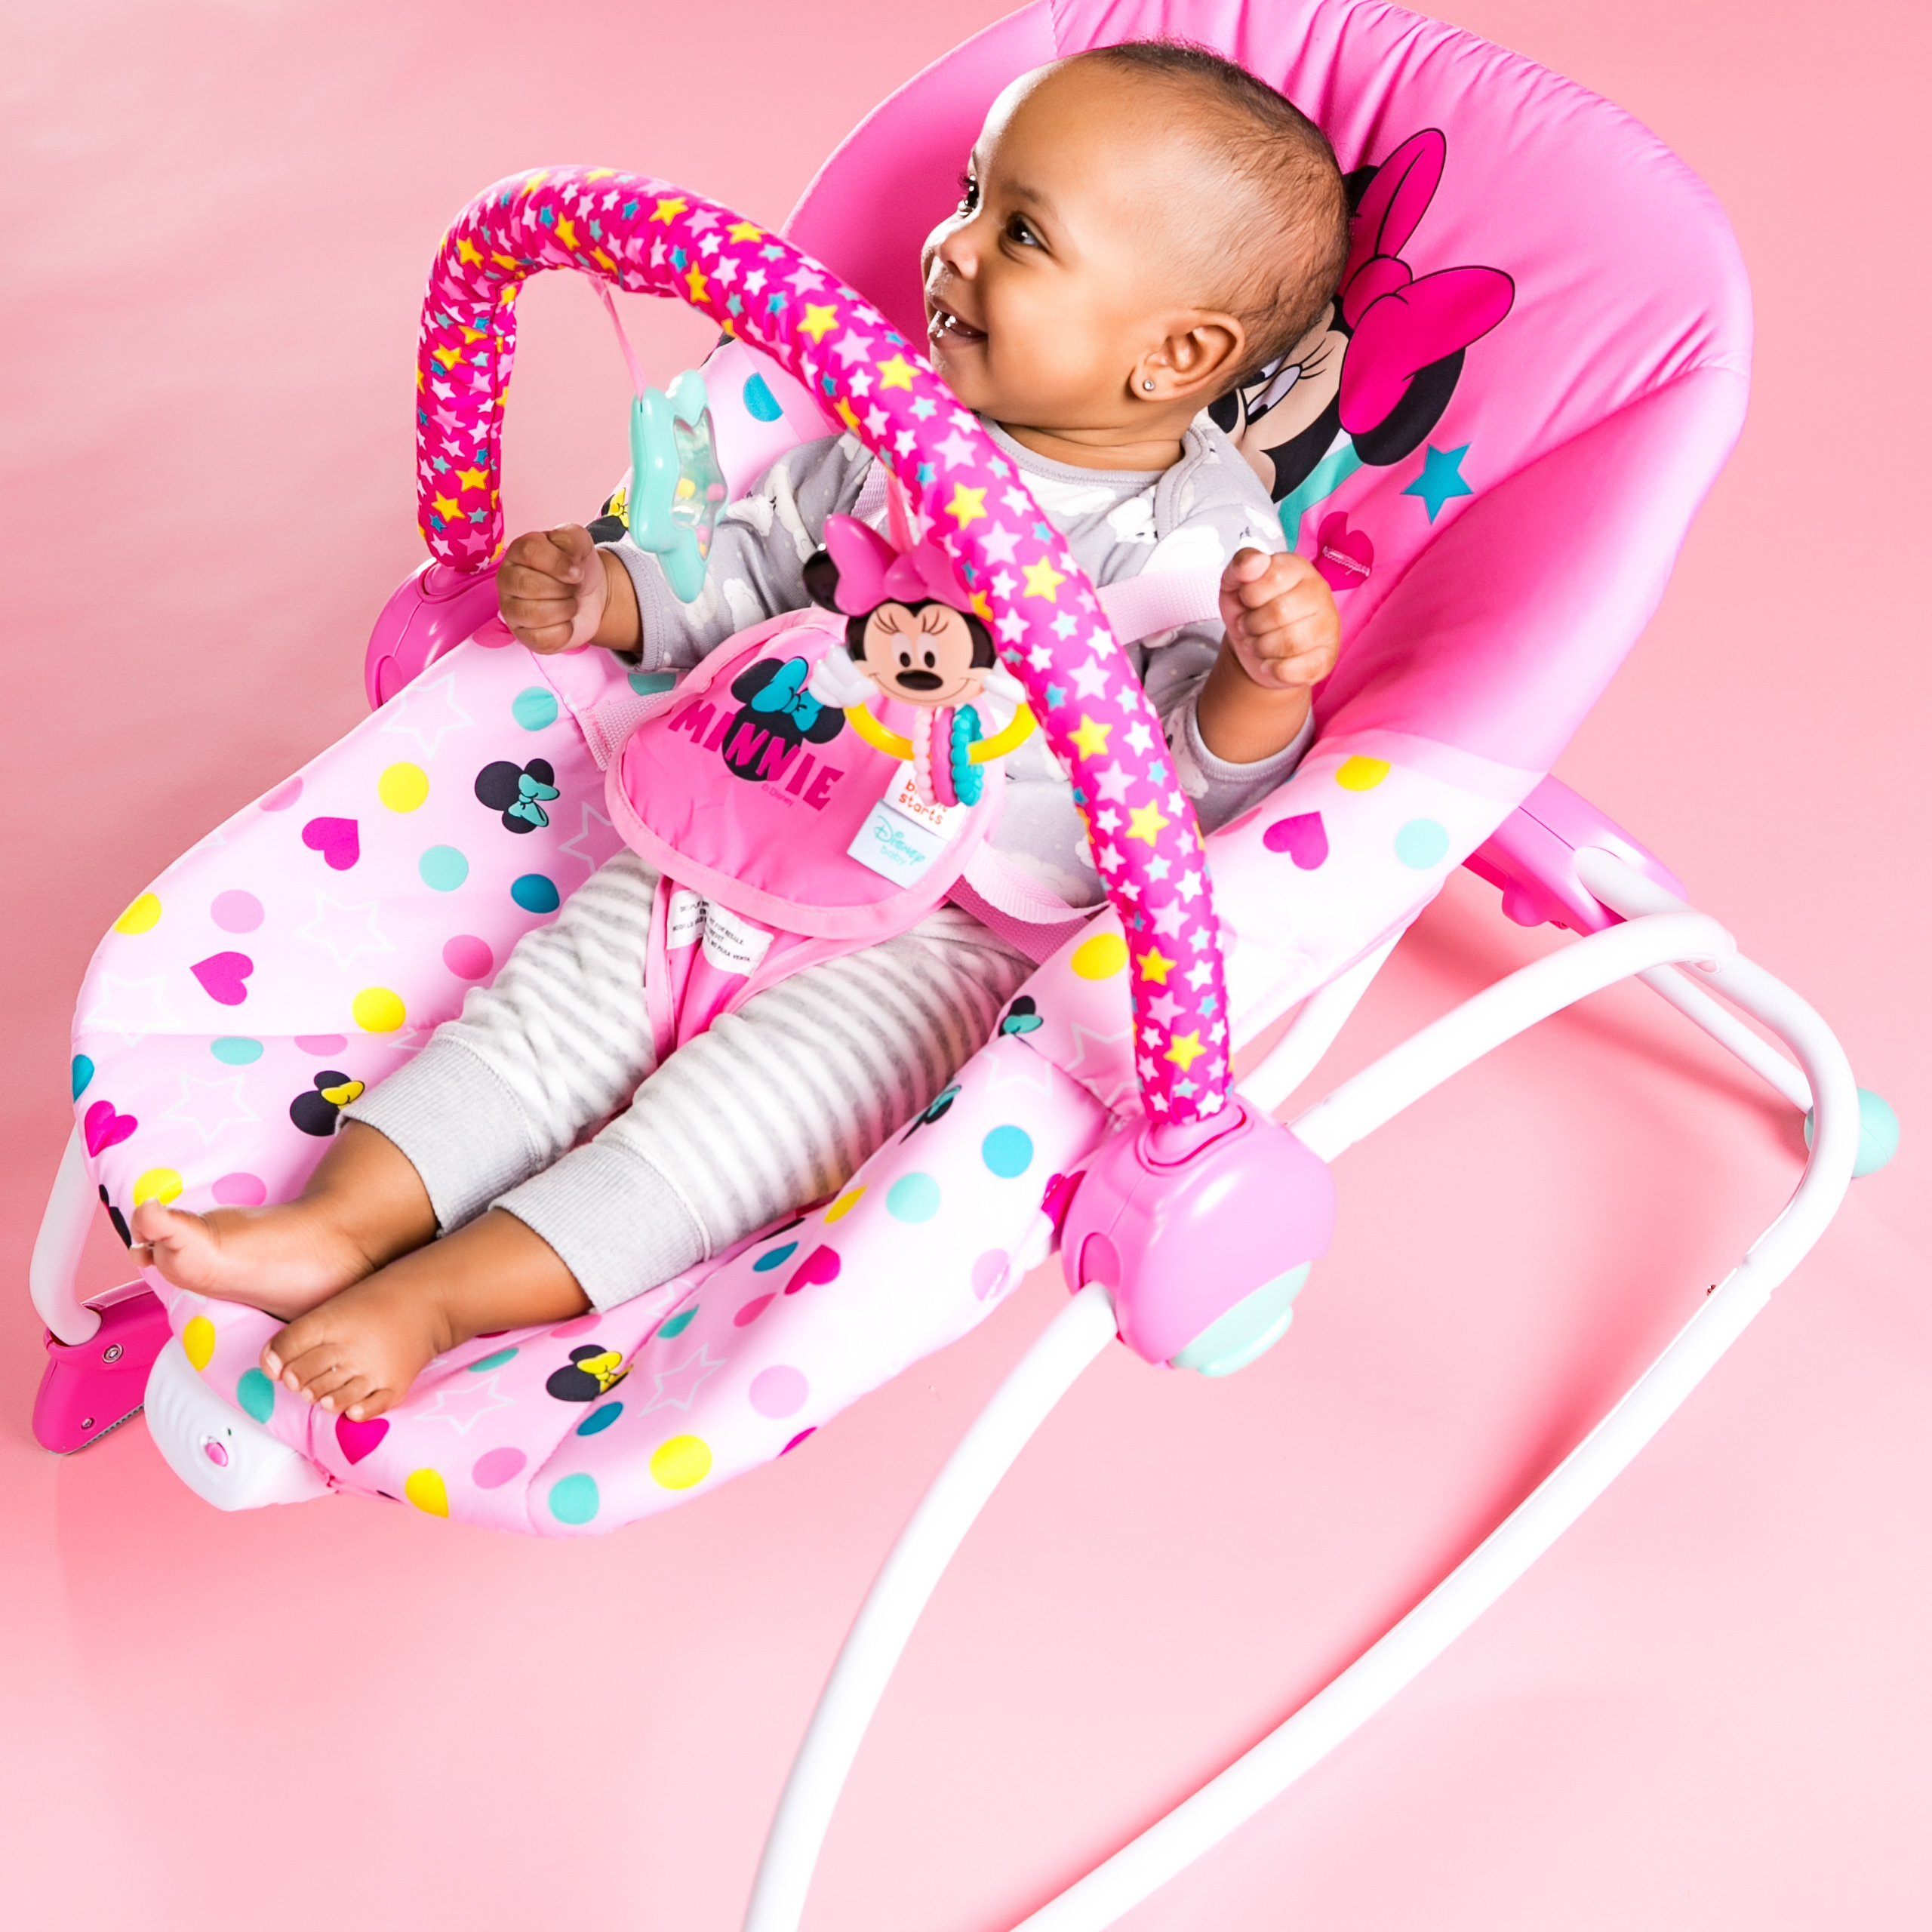 KIDS2 DISNEY BABY Stars & Smiles Infant to Toddler Rocker™